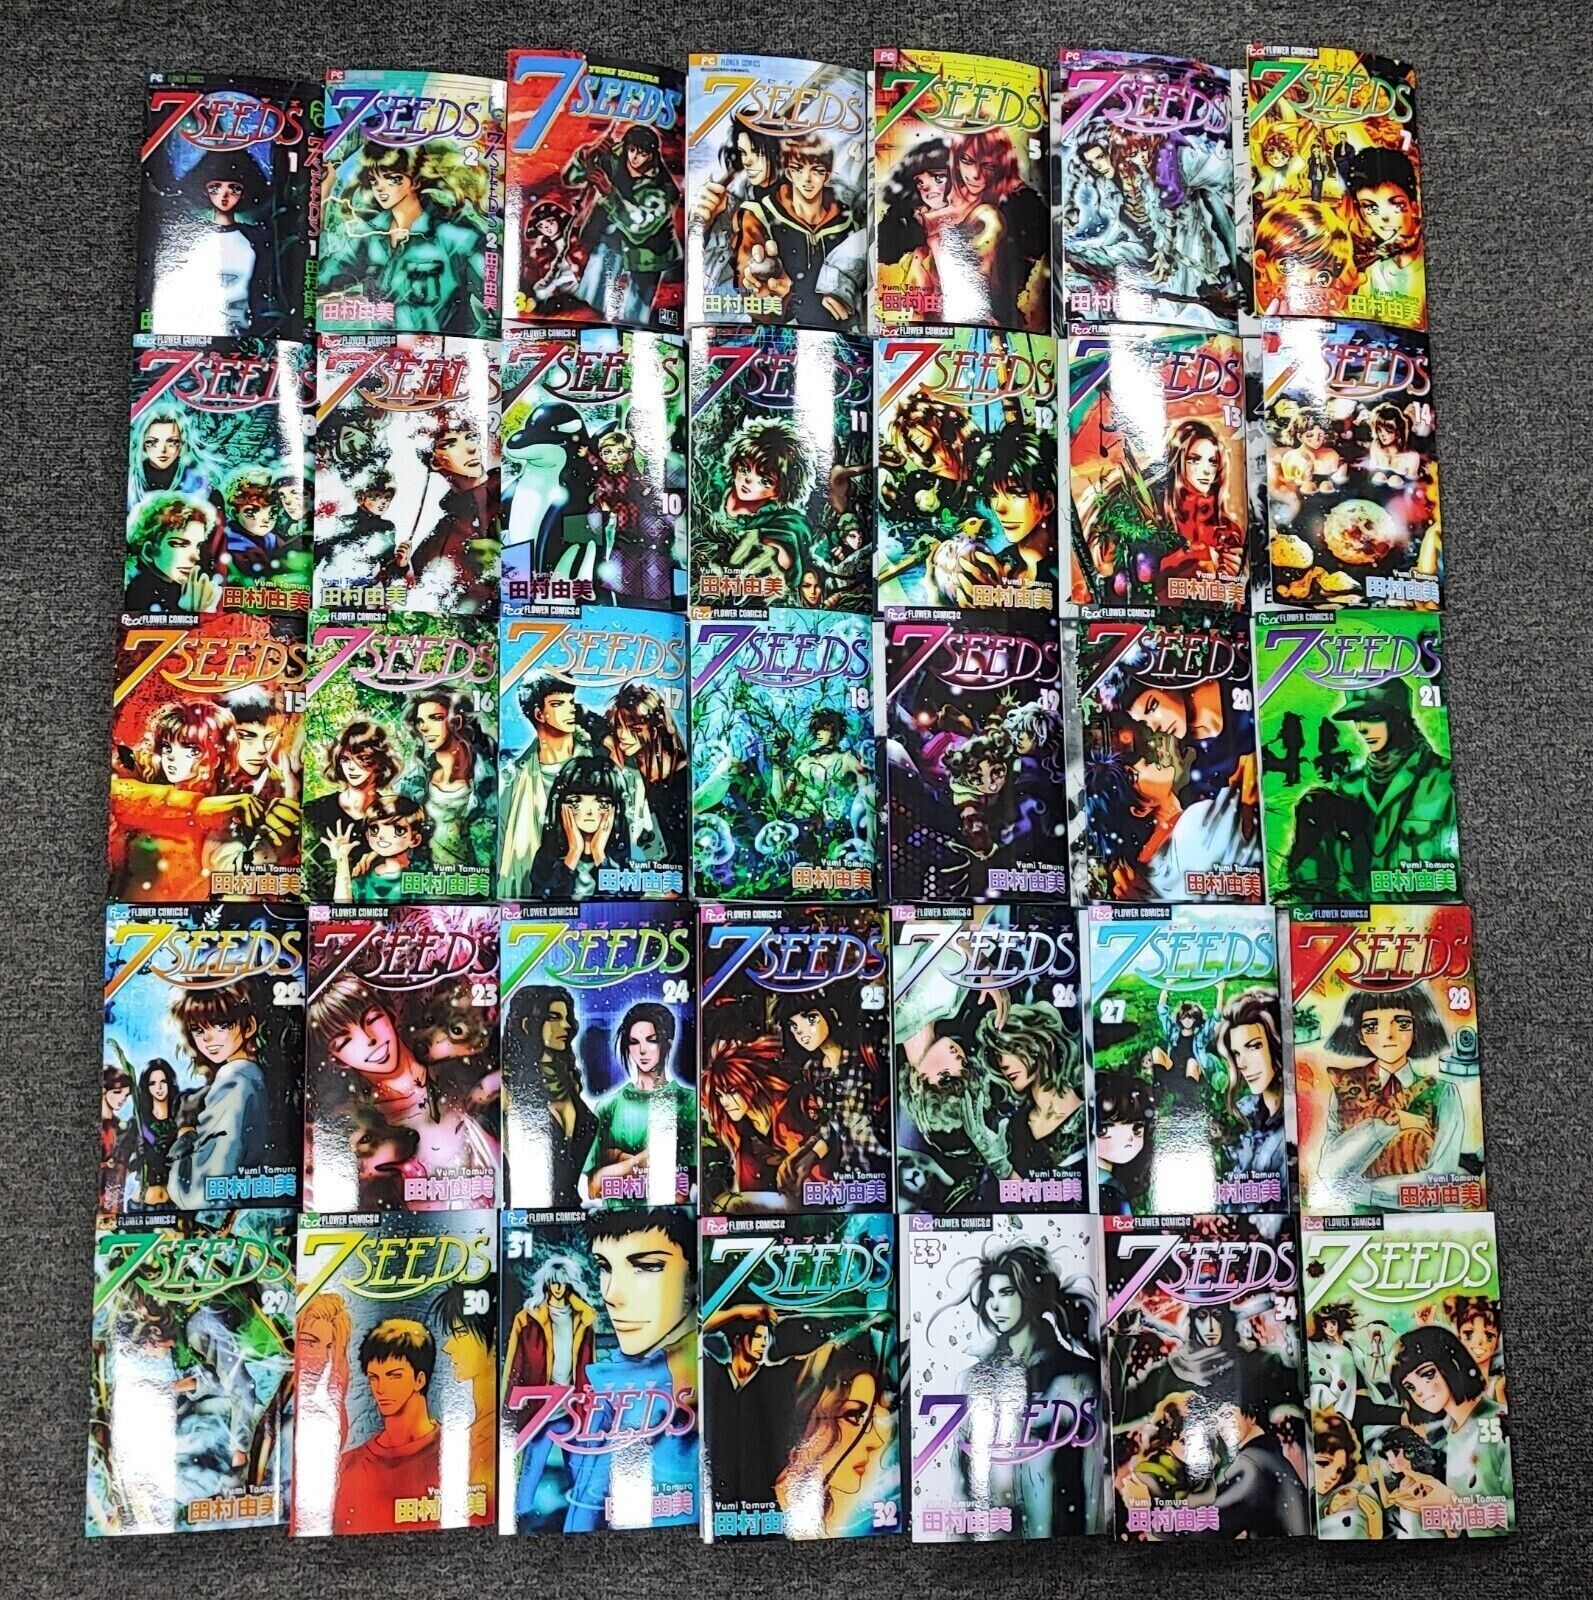 (Complete Set) 7 Seeds Manga By Yumi Tamura Volume 1-35 English Version Comic